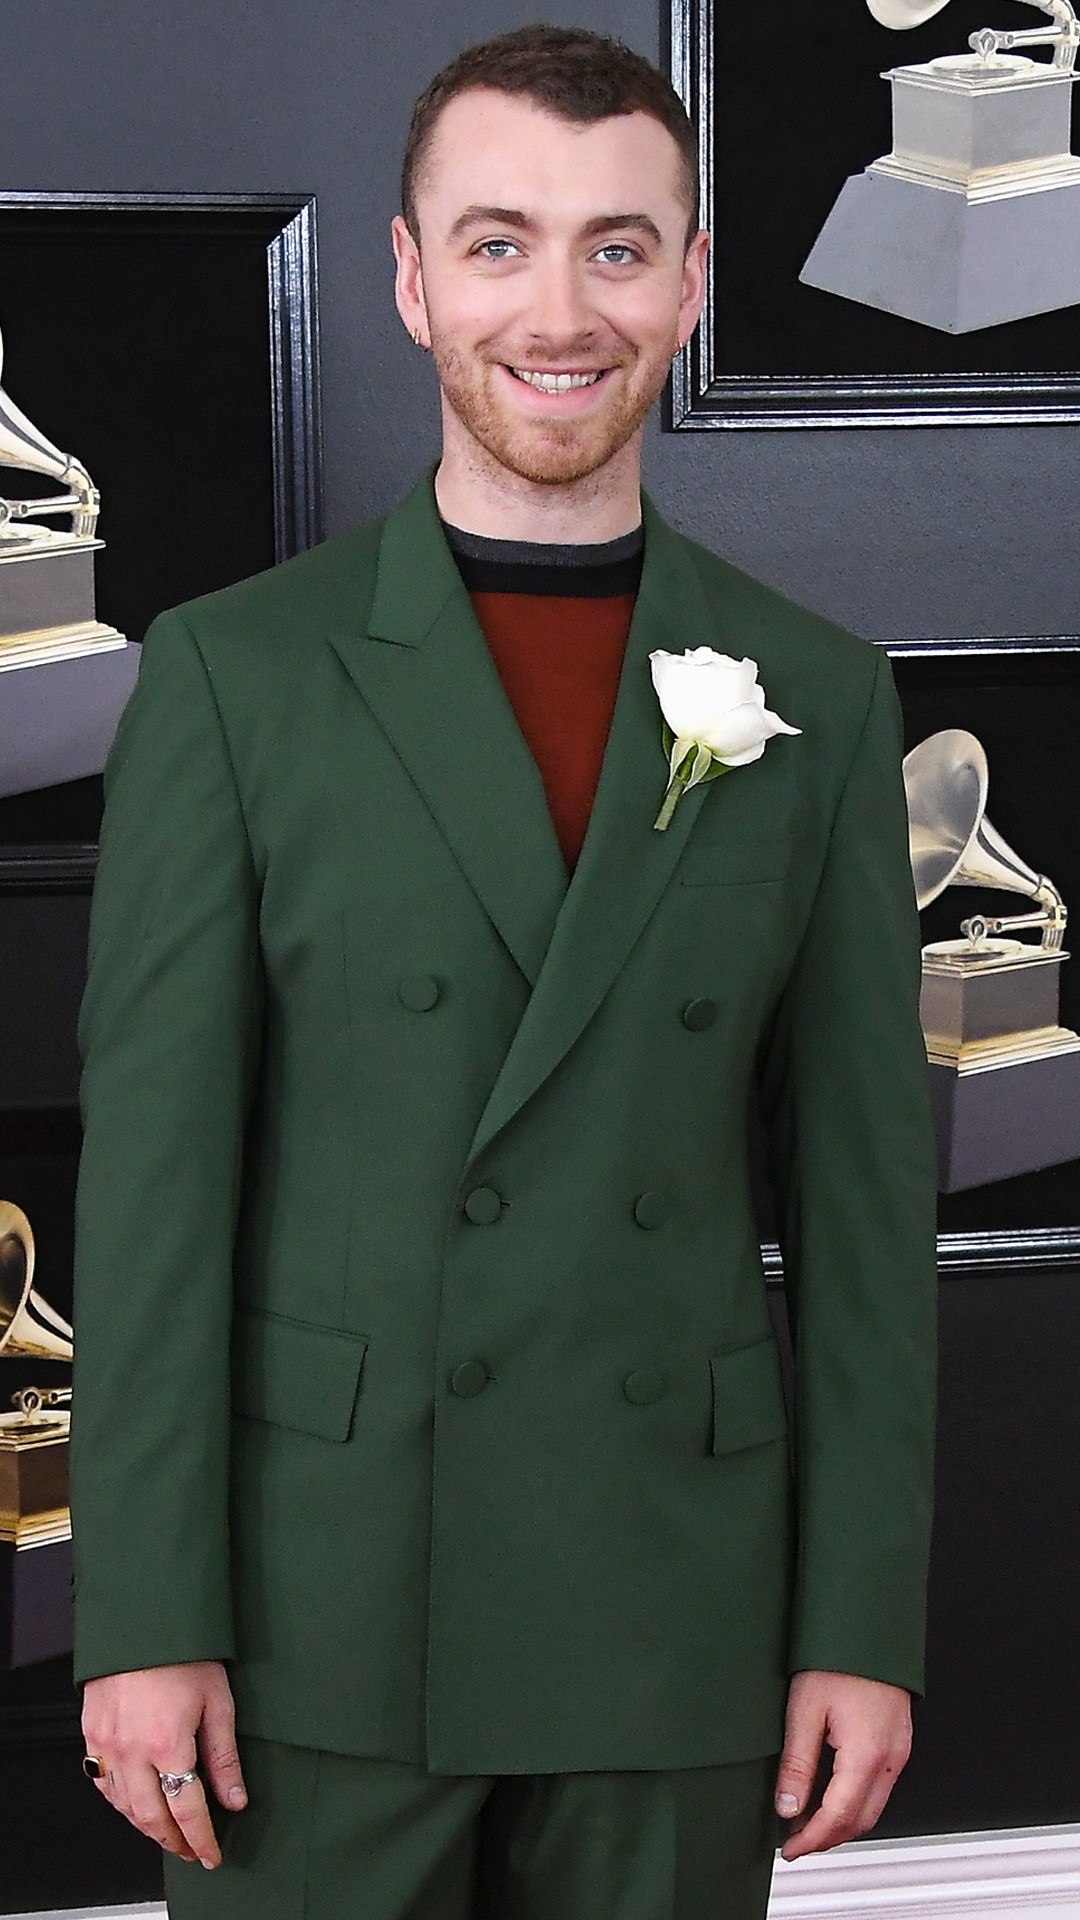 Sam Smith, 2018 Grammy Awards, Red Carpet Fashions